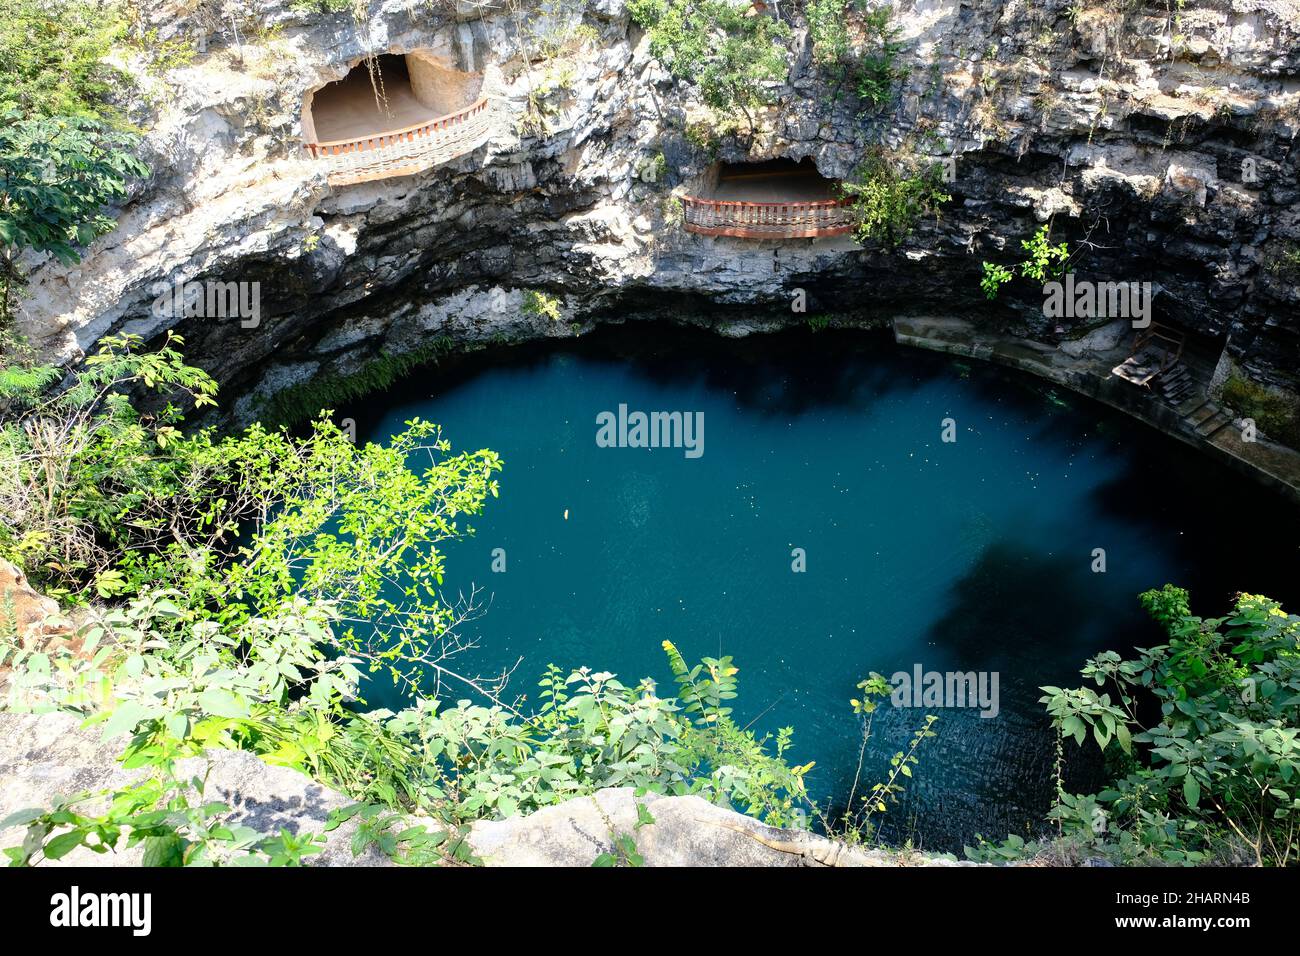 Mexico Chichen Itza - Merida - Cenote X-Cajum - open cenote with 4 lookout points Stock Photo